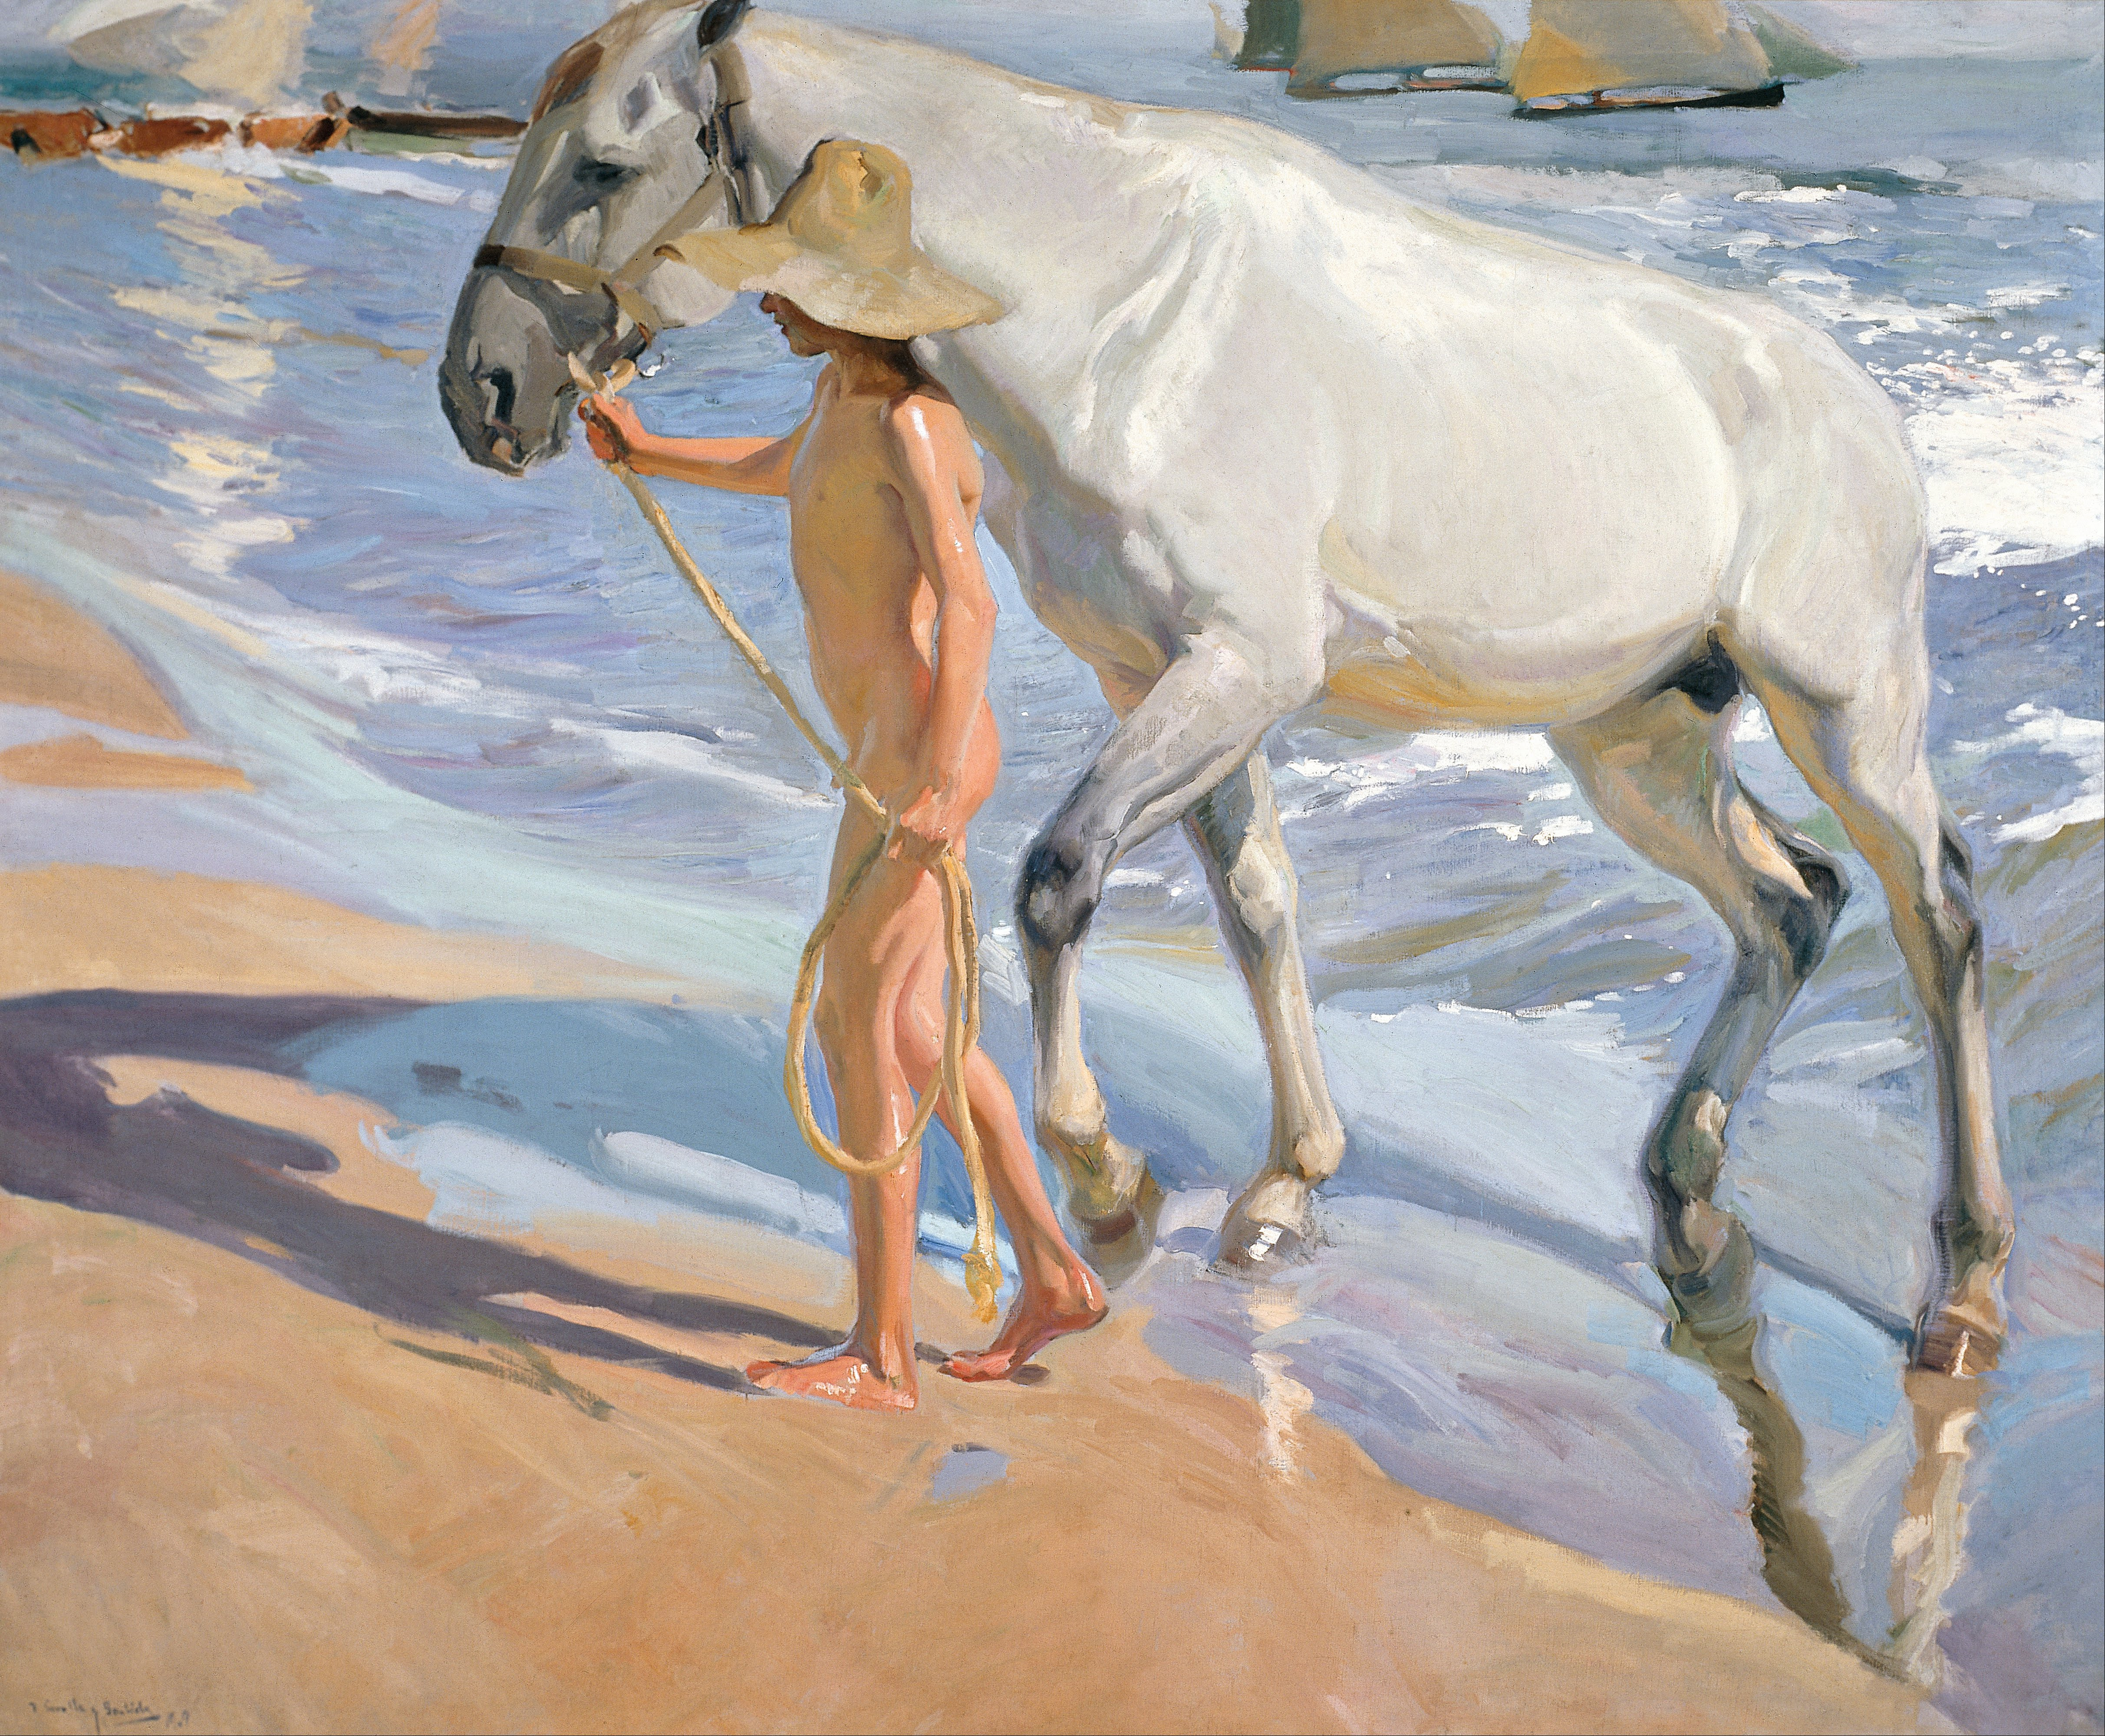 Joaquín Sorolla y Bastida -The Horse’s Bath